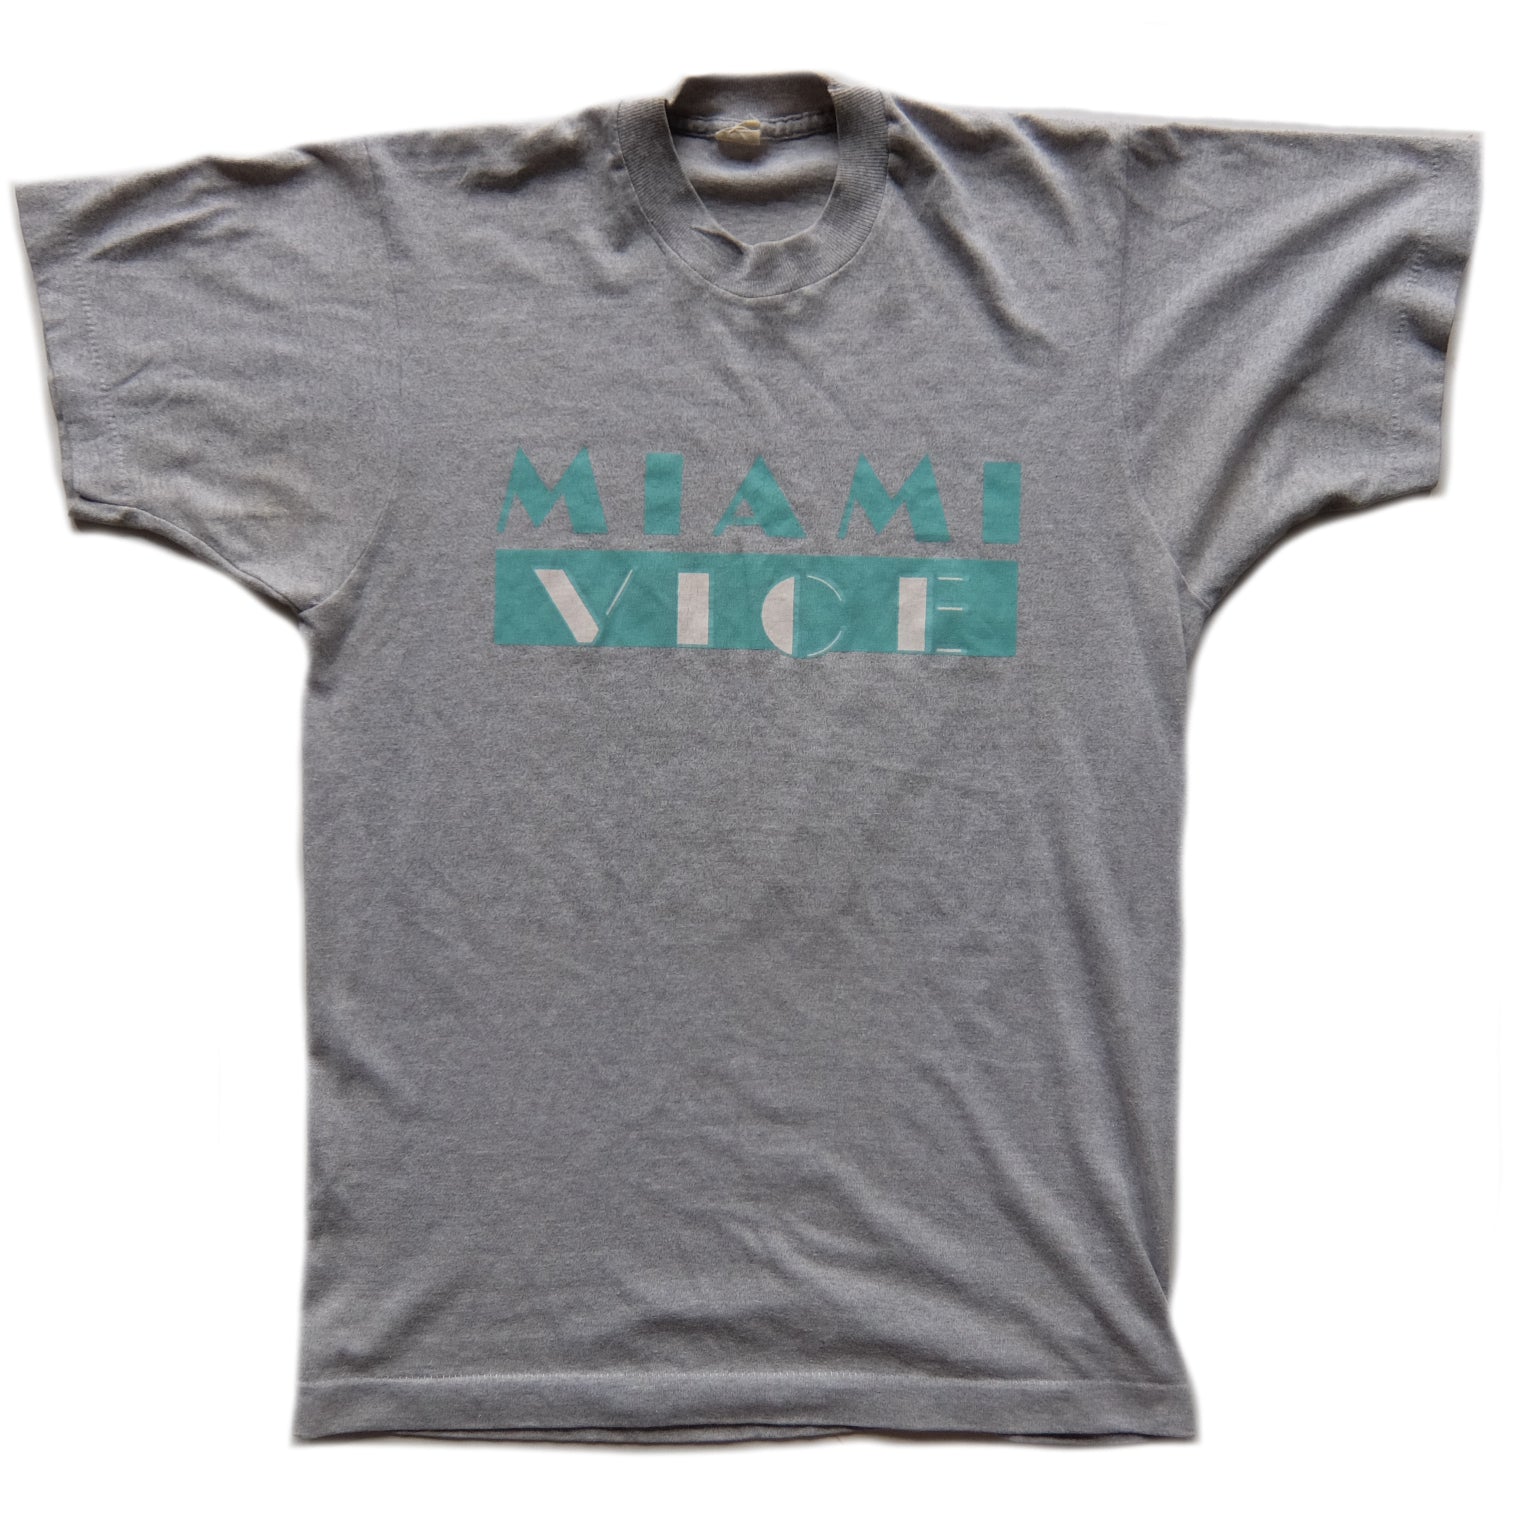 Miami Vice - 80's Love T-Shirt Size S